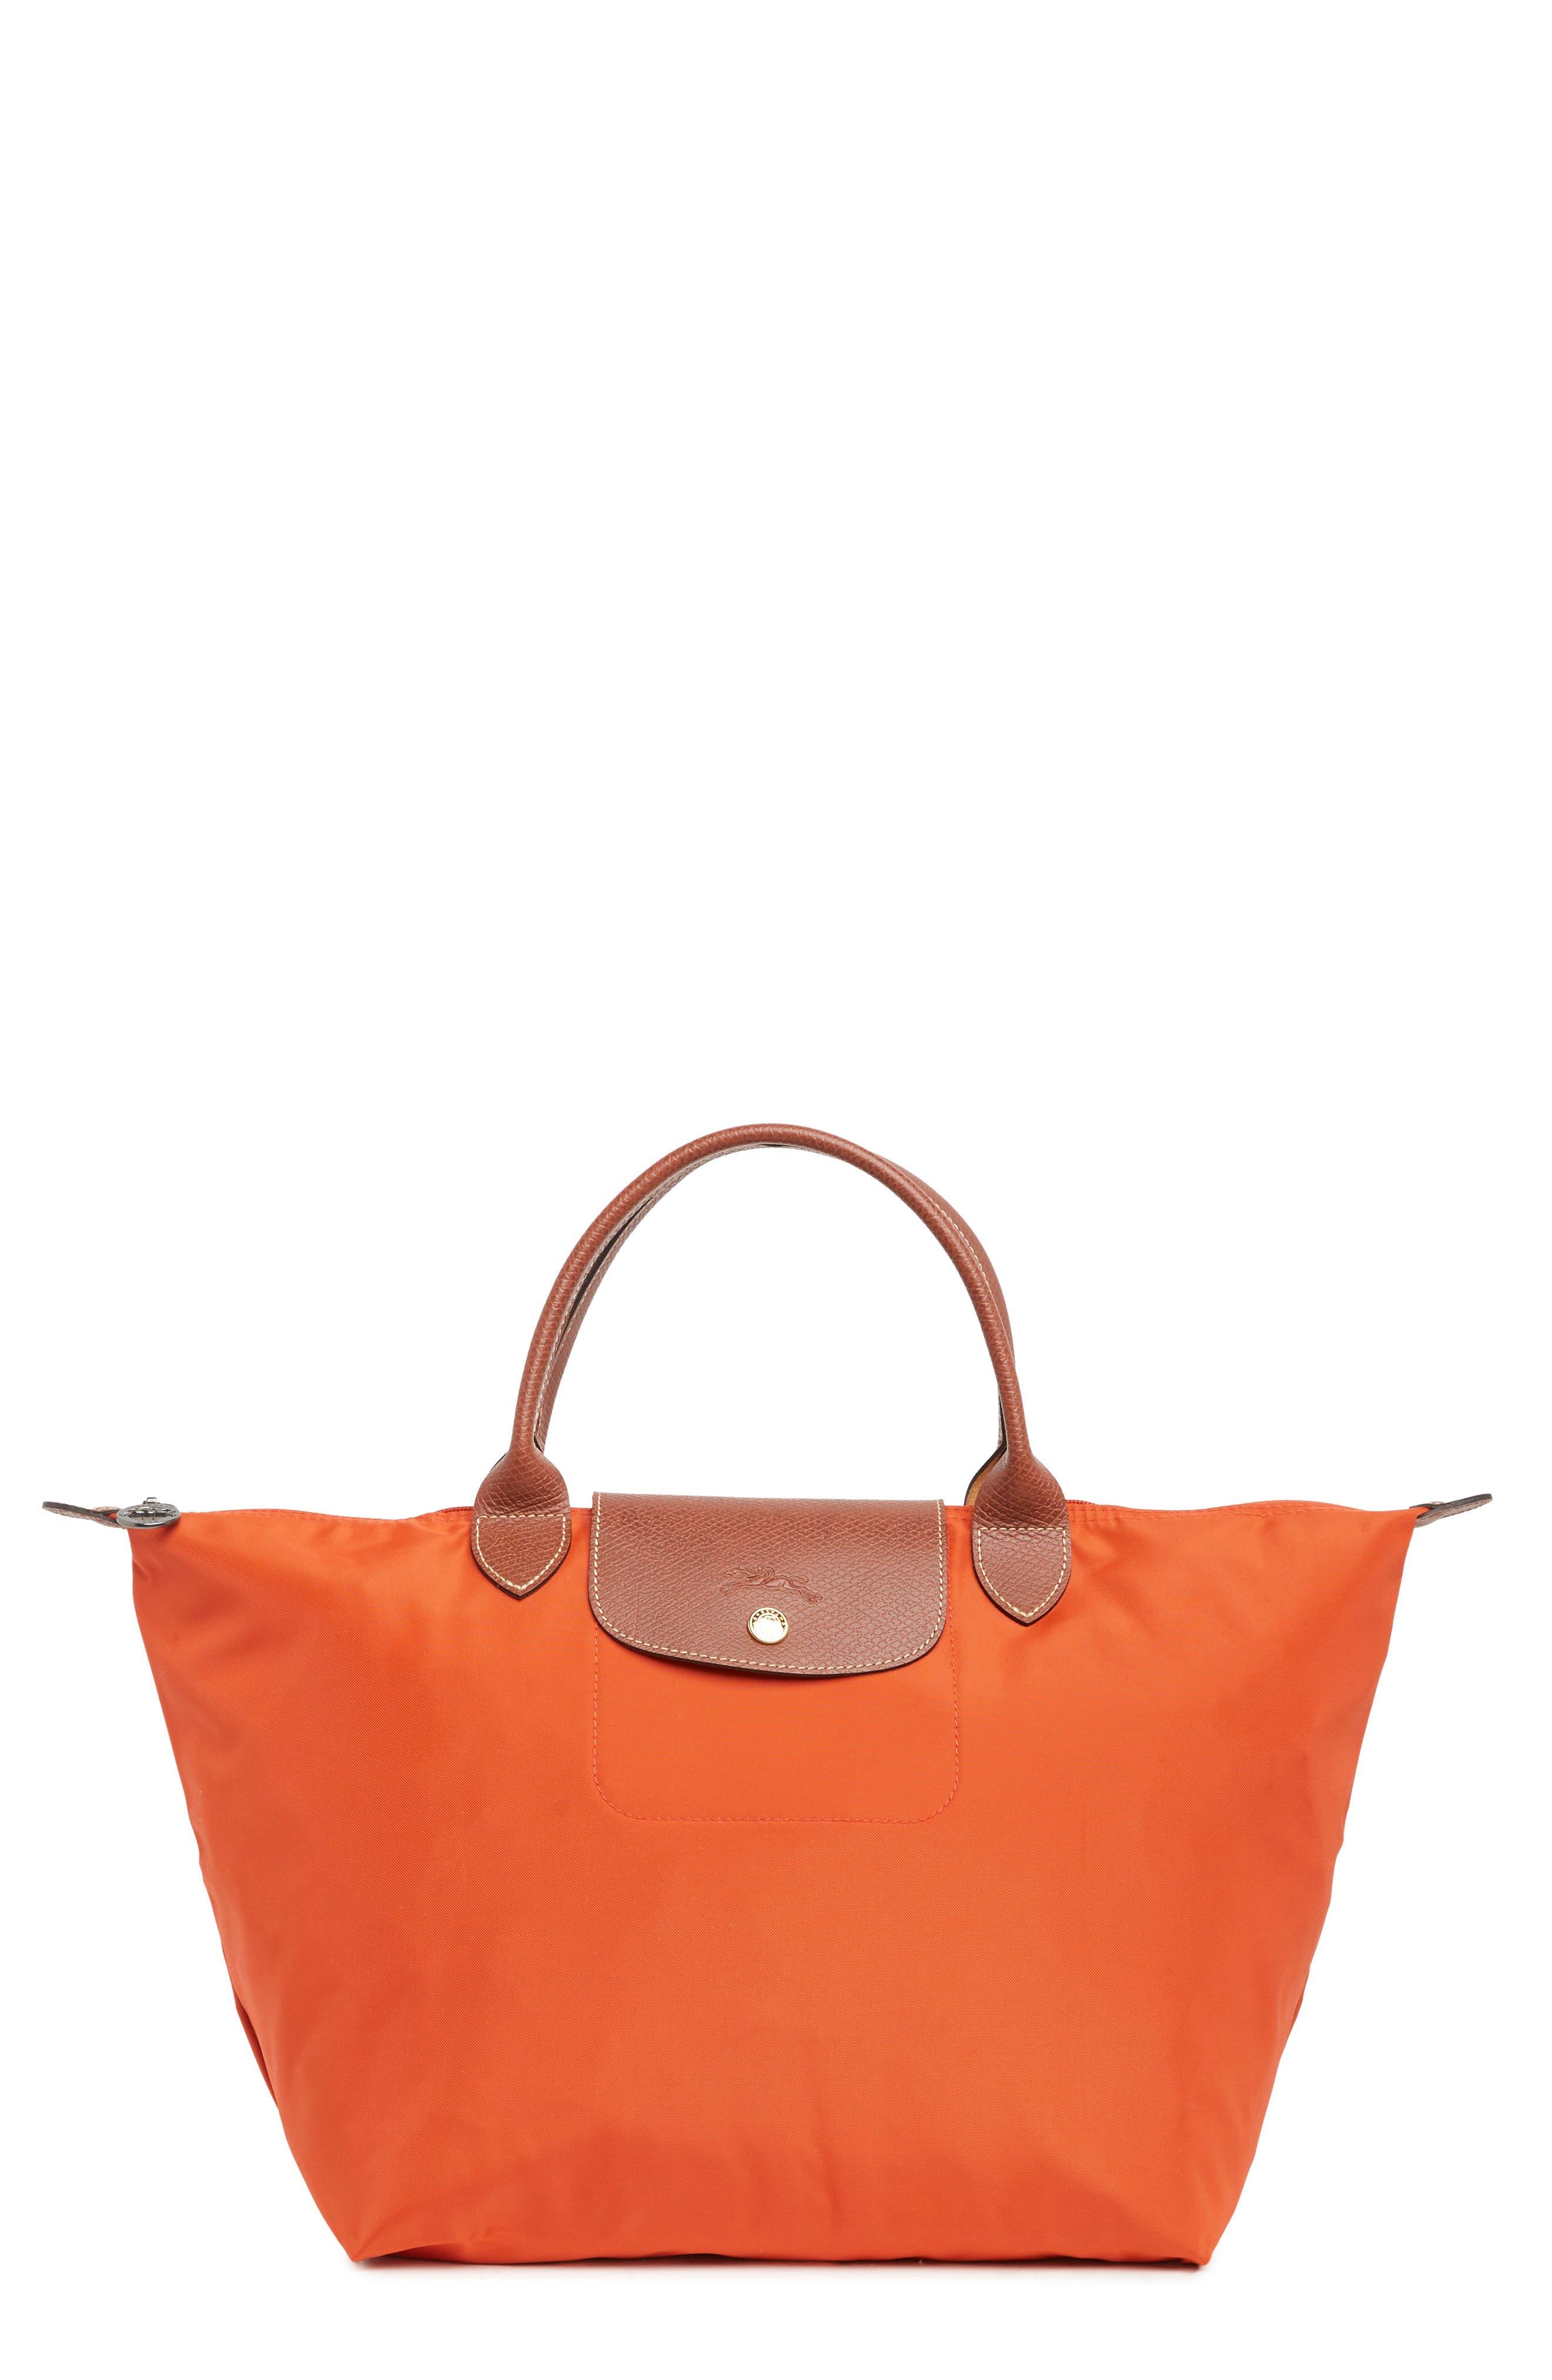 Longchamp Le Pliage Medium Top Handle Bag in Orange | Lyst